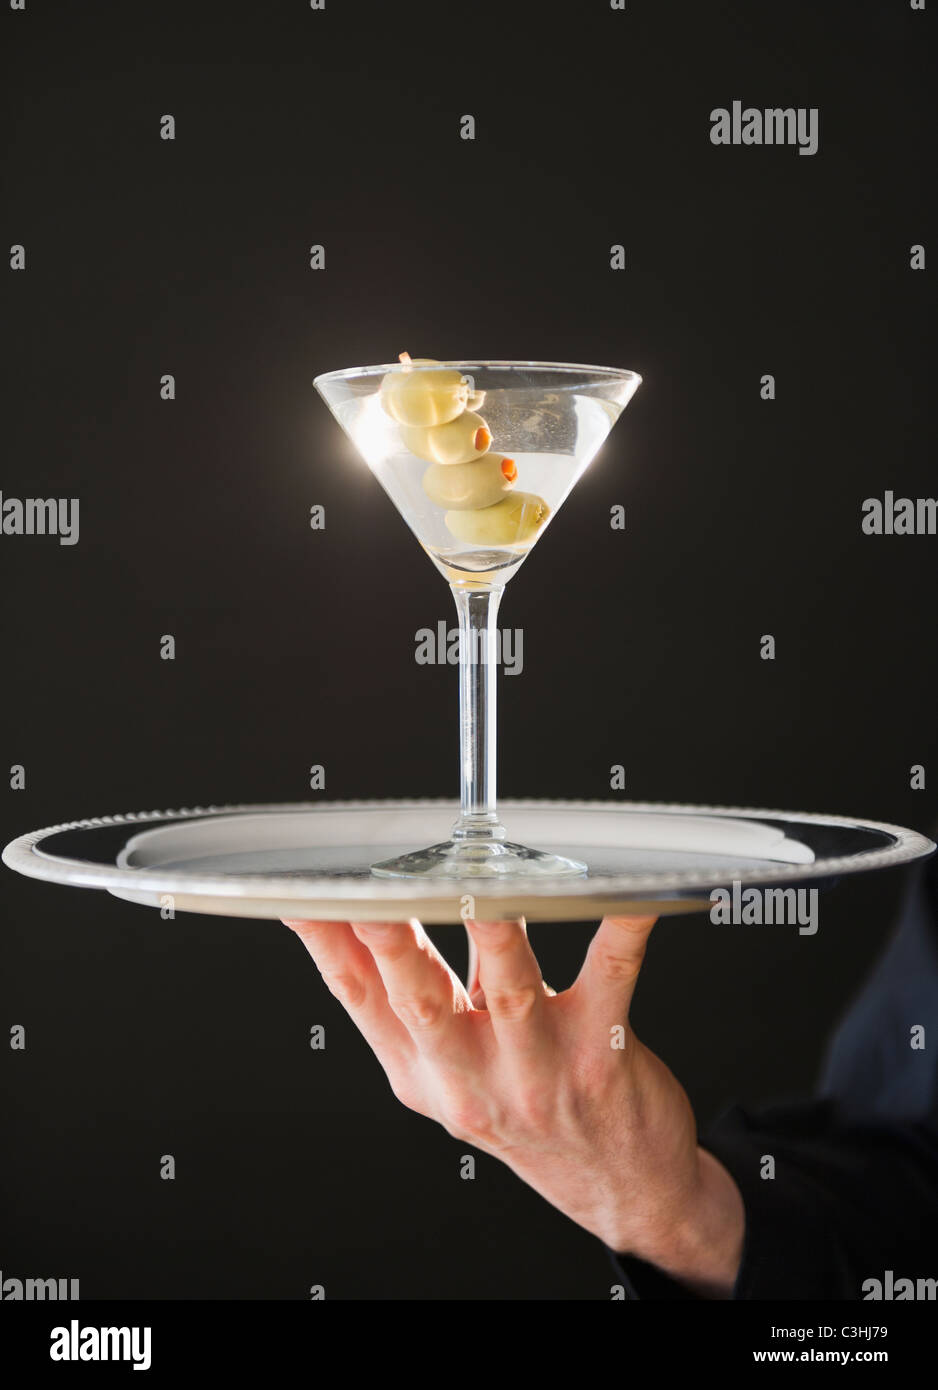 Mano sujetando la bandeja con el martini Foto de stock